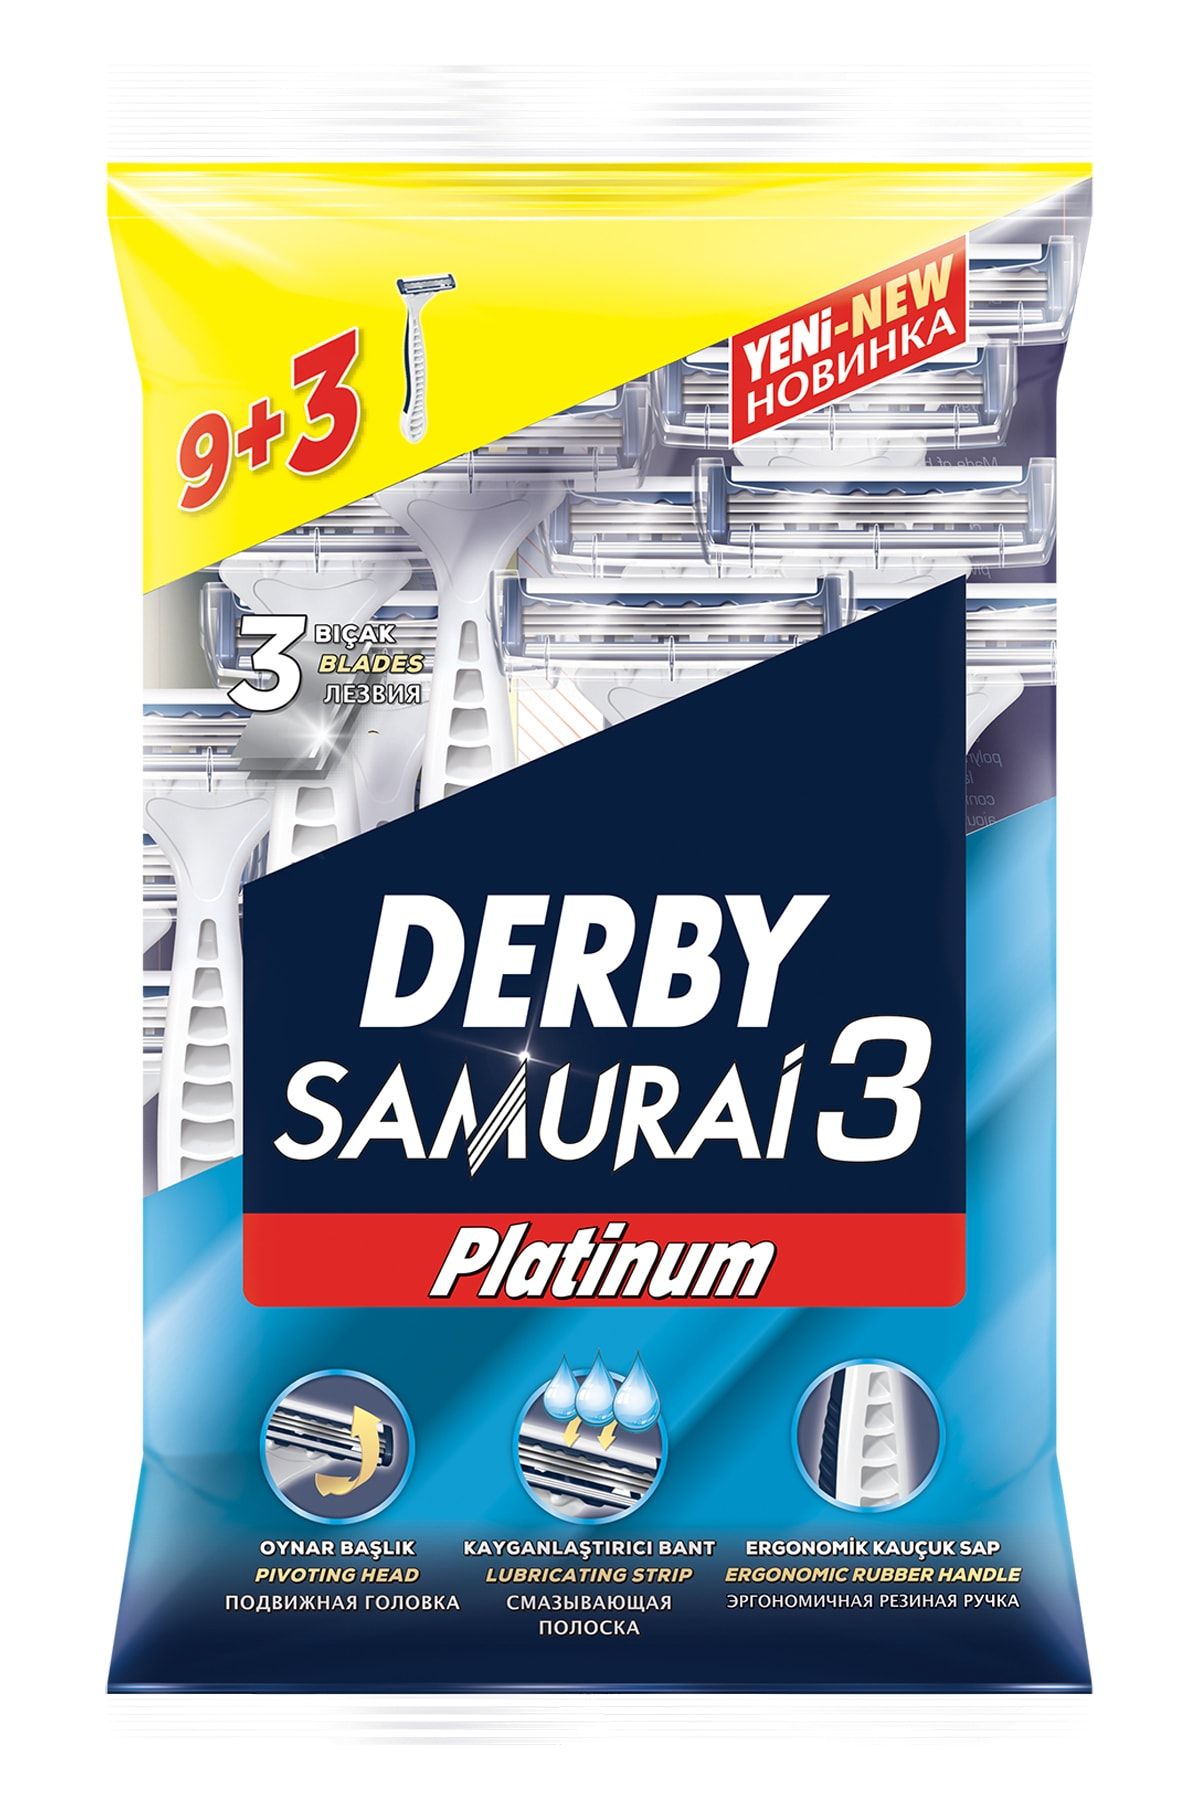 Derby Samurai 3 Platinum 9+3 Poşet